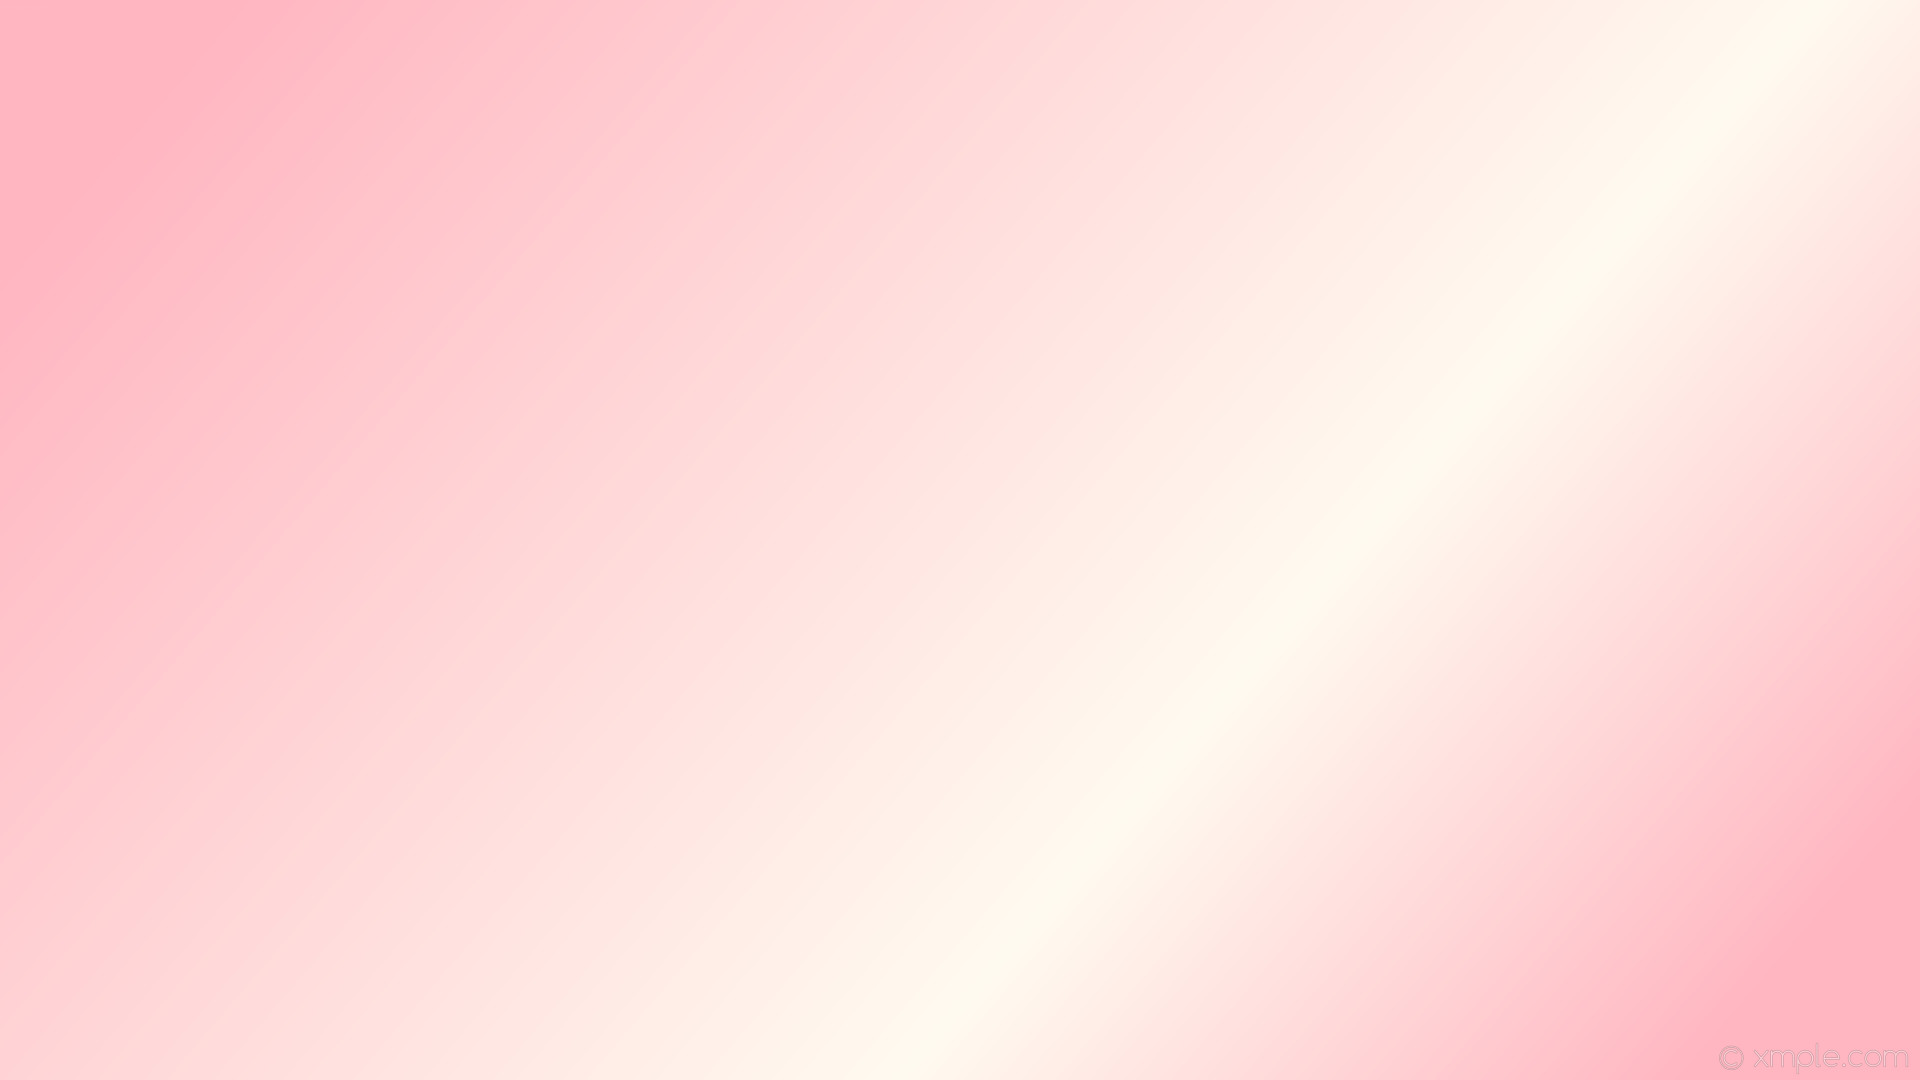 1920x1080 wallpaper pink gradient linear white highlight light pink floral white  #ffb6c1 #fffaf0 345Â°